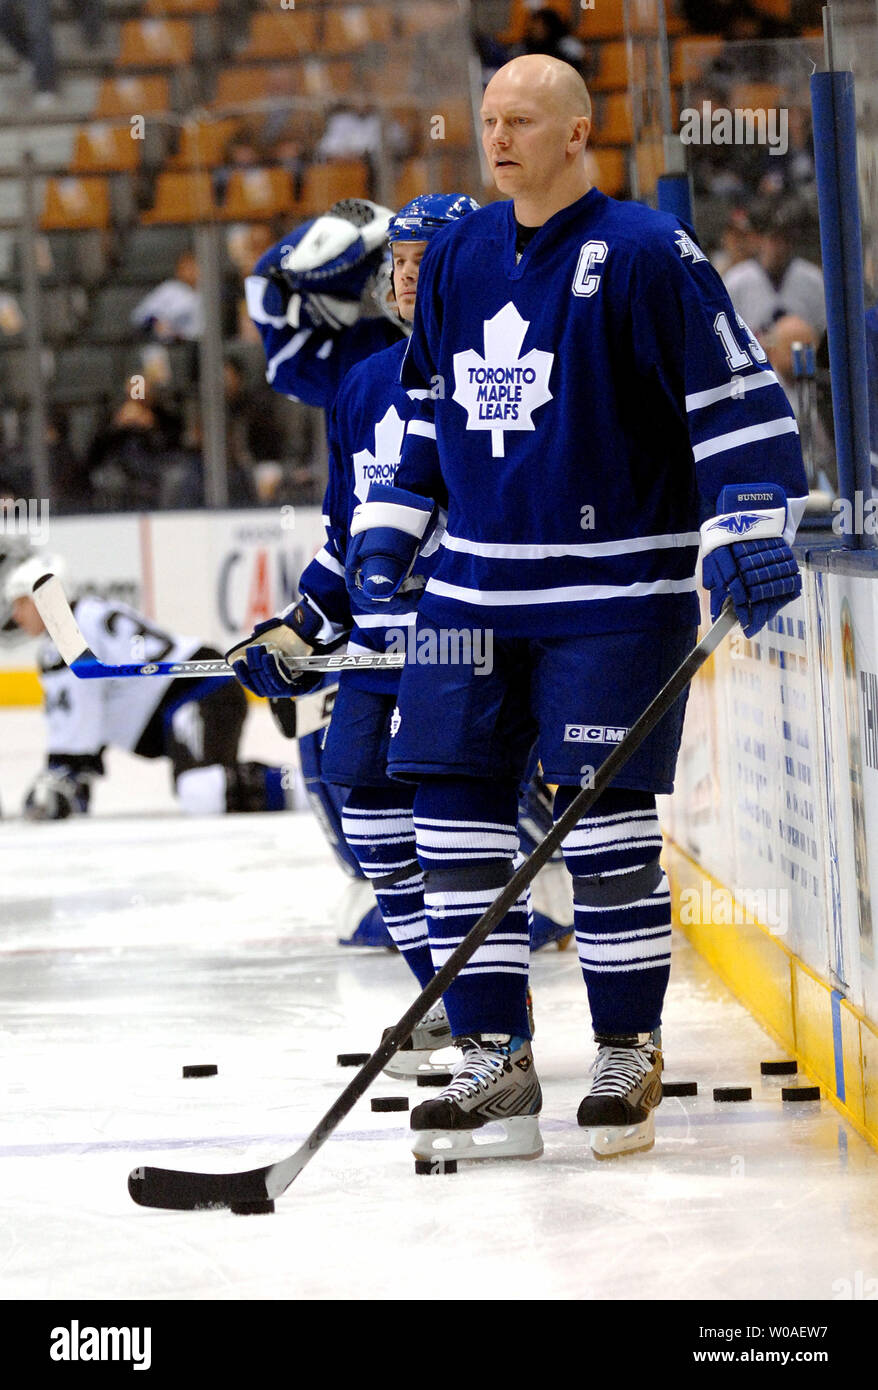 Retiring Mats Sundin leaves game as maybe best Leaf player ever - The  Hockey News